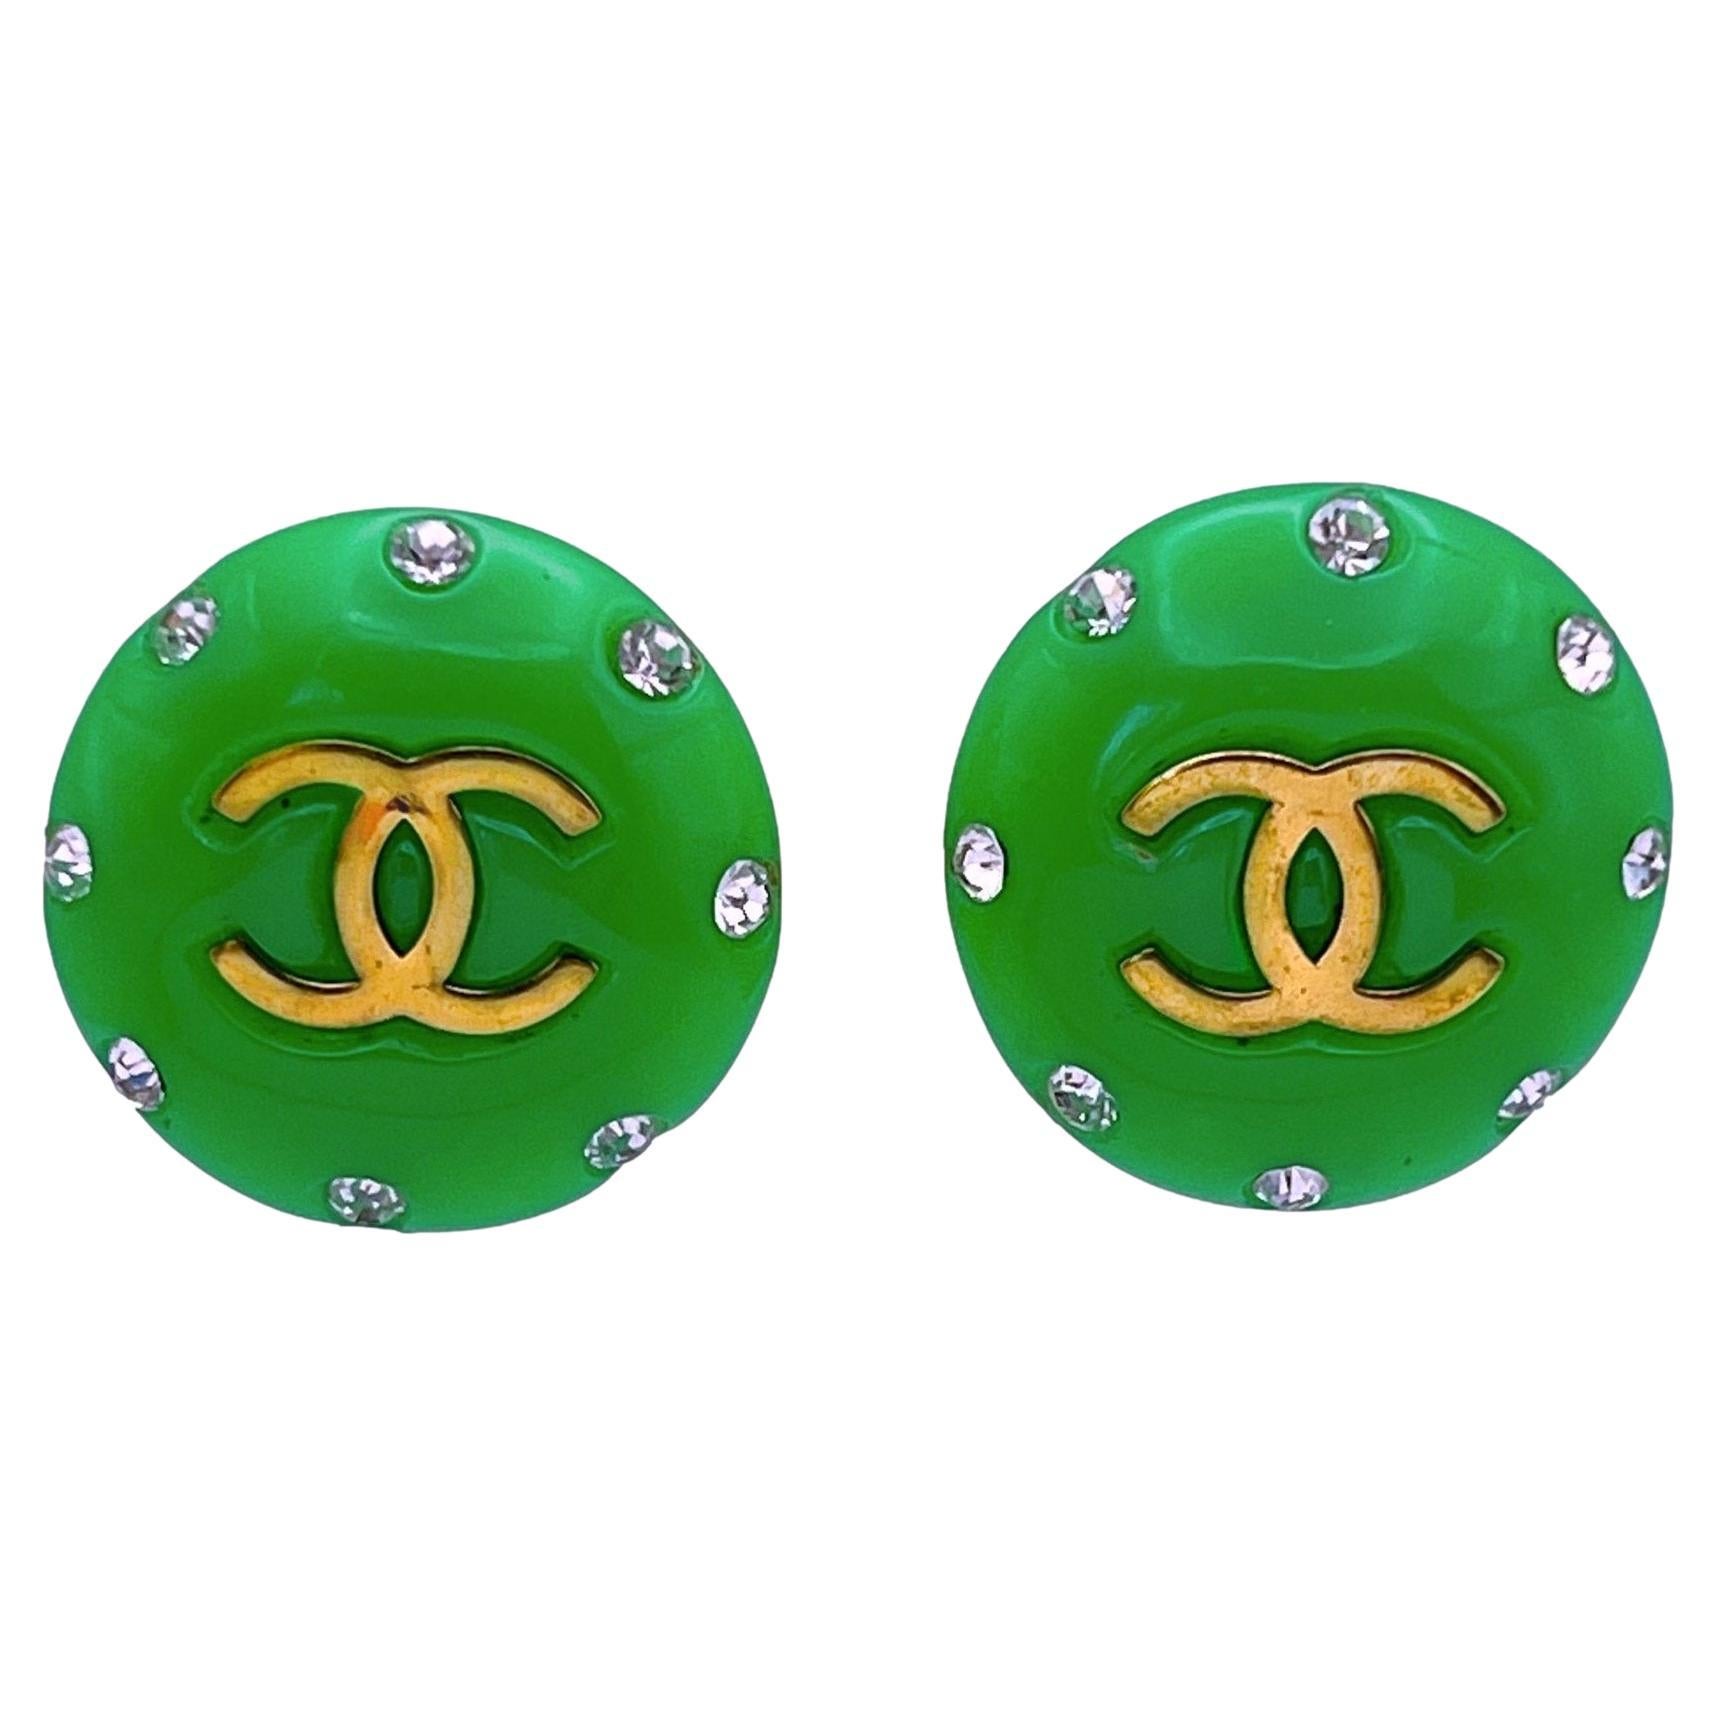 Chanel CC Crystal Turn Lock Earrings Silver Tone 22B – Coco Approved Studio